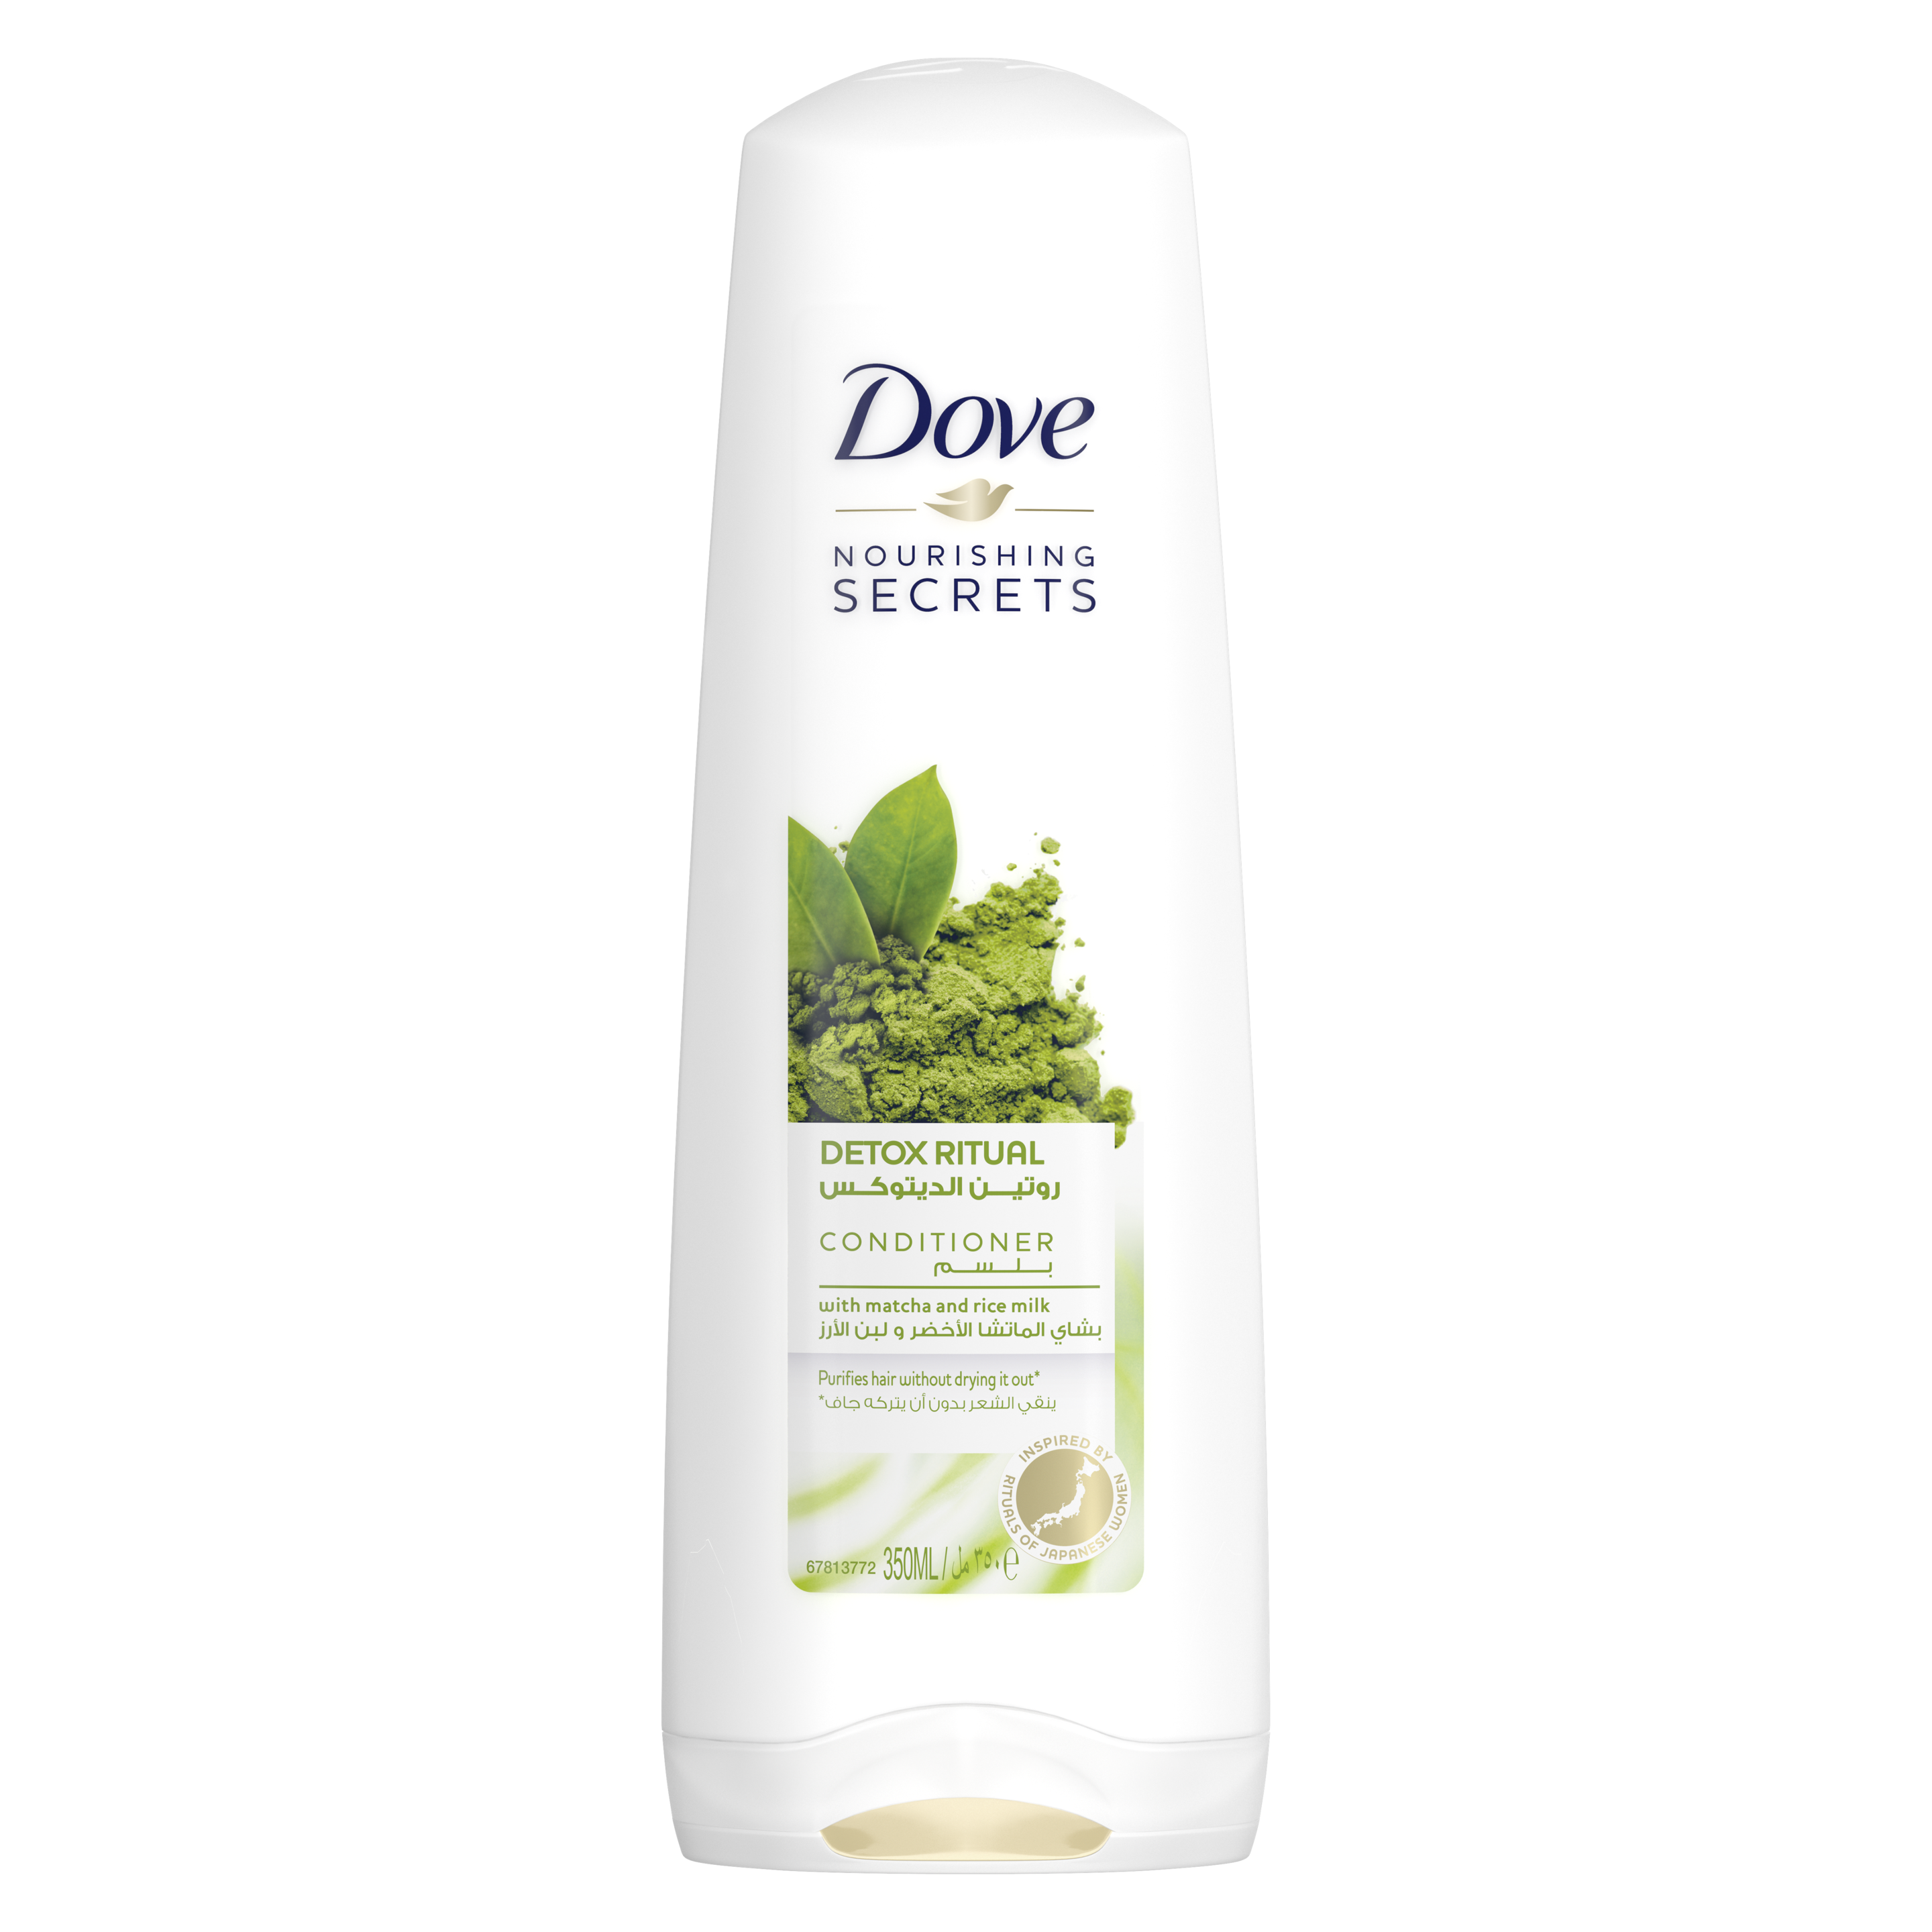 Dove Nourishing Secrets Conditioner Detox Ritual - Matcha and Rice Milk 350ml